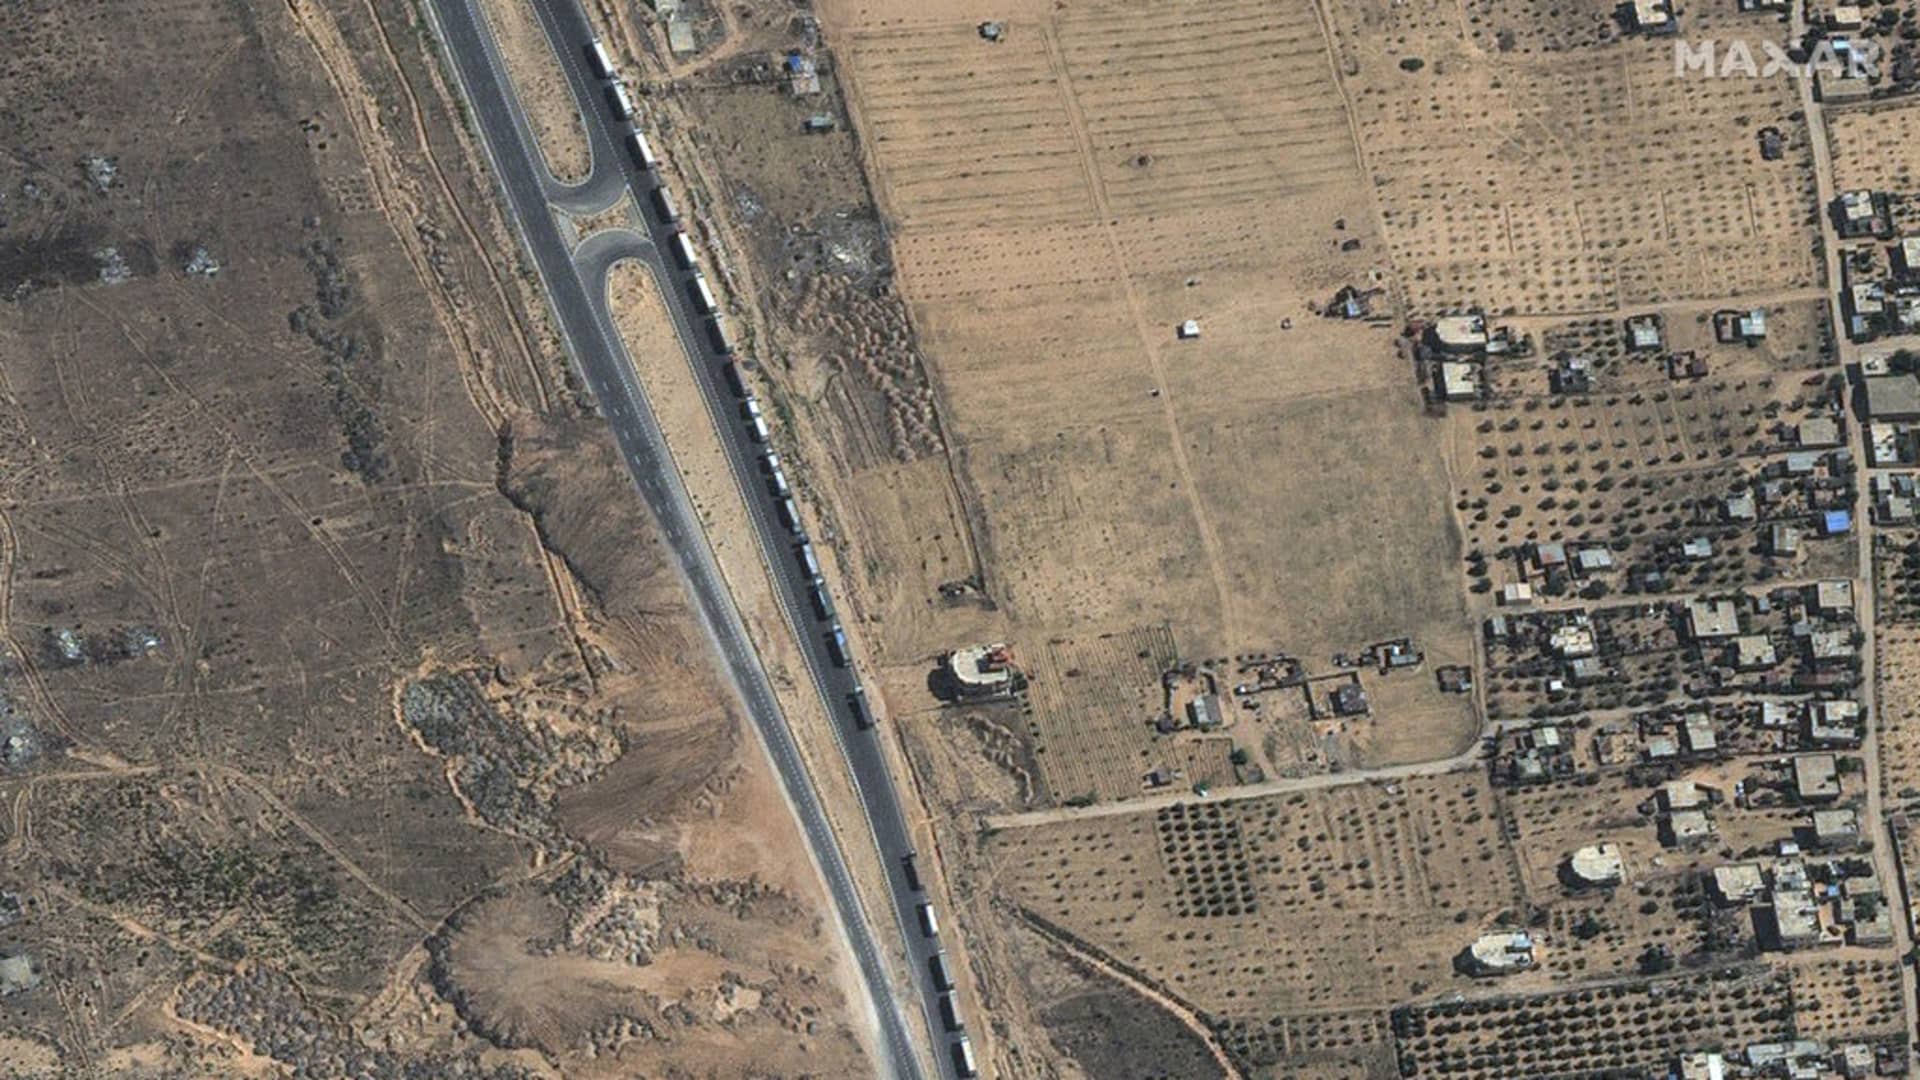 Maxar satellite imagery of a second set of cargo trucks near Sheikh Zuweid, Egypt (location: 31.215, 34.143) 